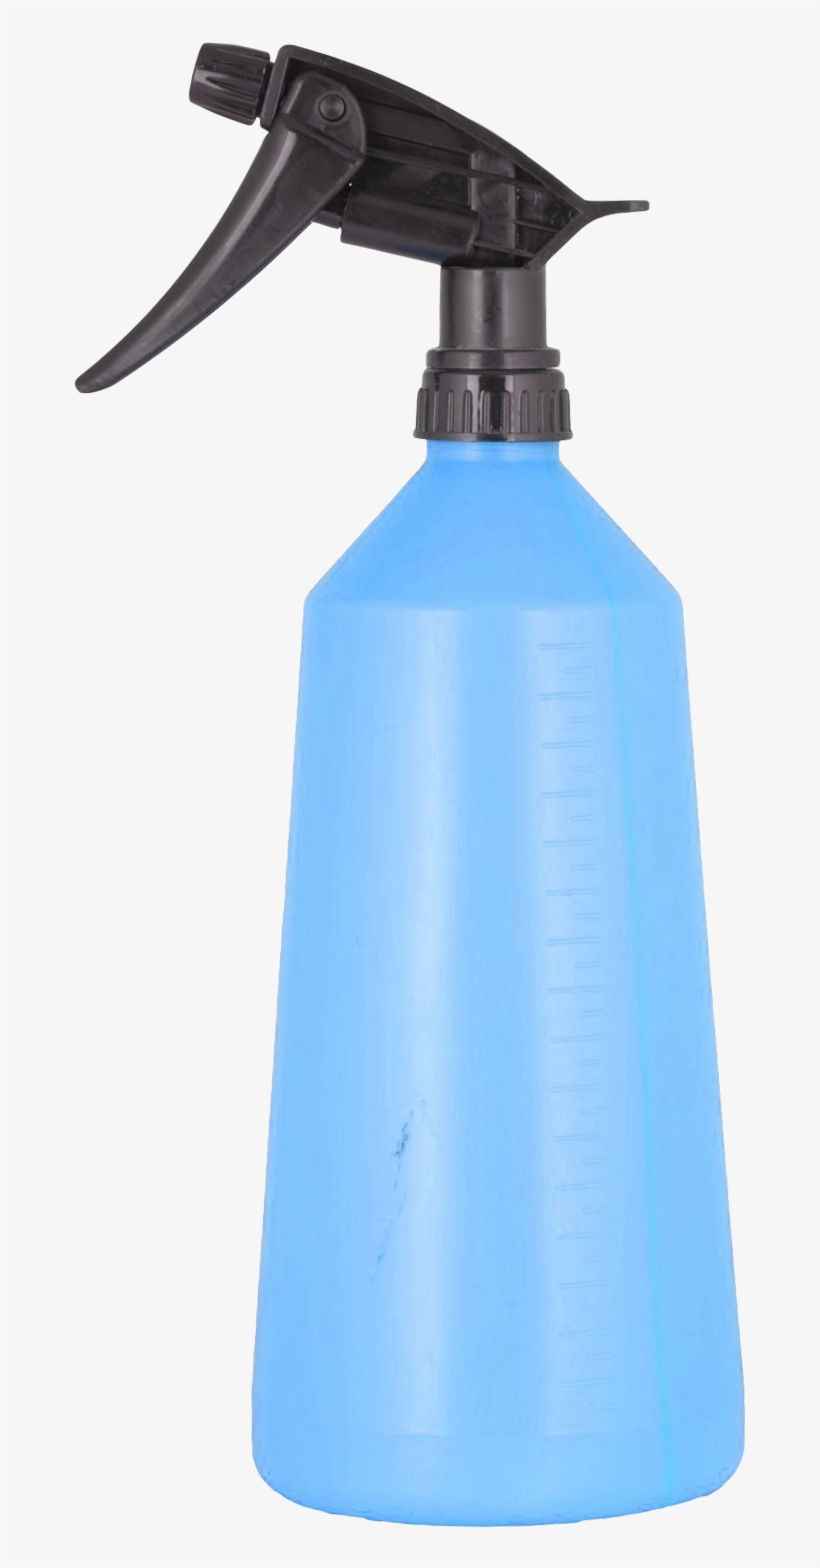 Spray Bottle Png Transparent Image - Spray Bottle Transparent Background, transparent png #589419